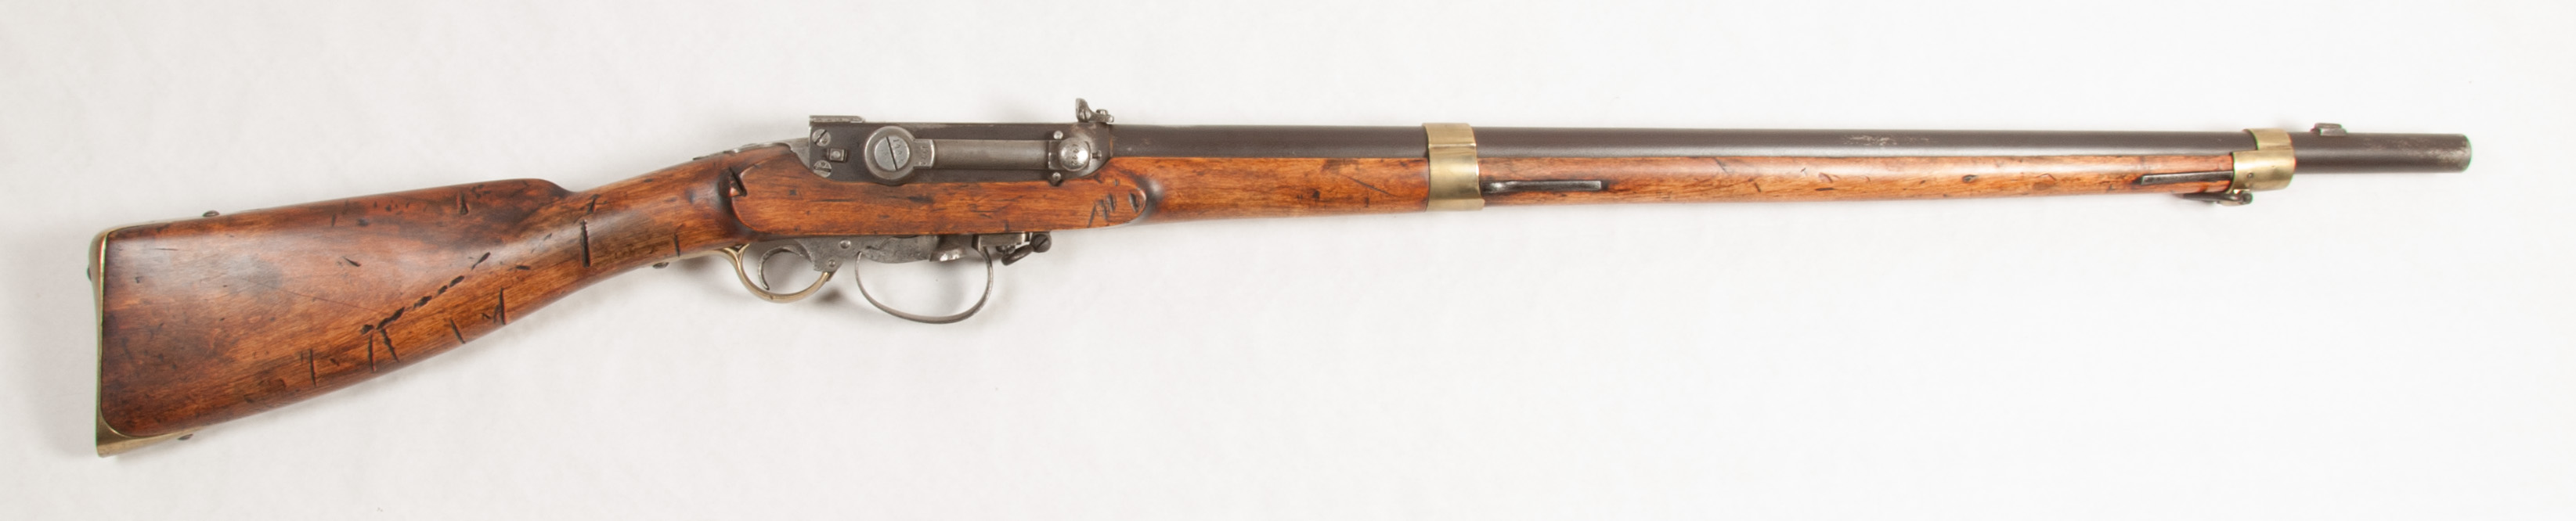 ./guns/rifle/bilder/Rifle-Kongsberg-Kammerlader-M1857-Marine-1442-1.jpg